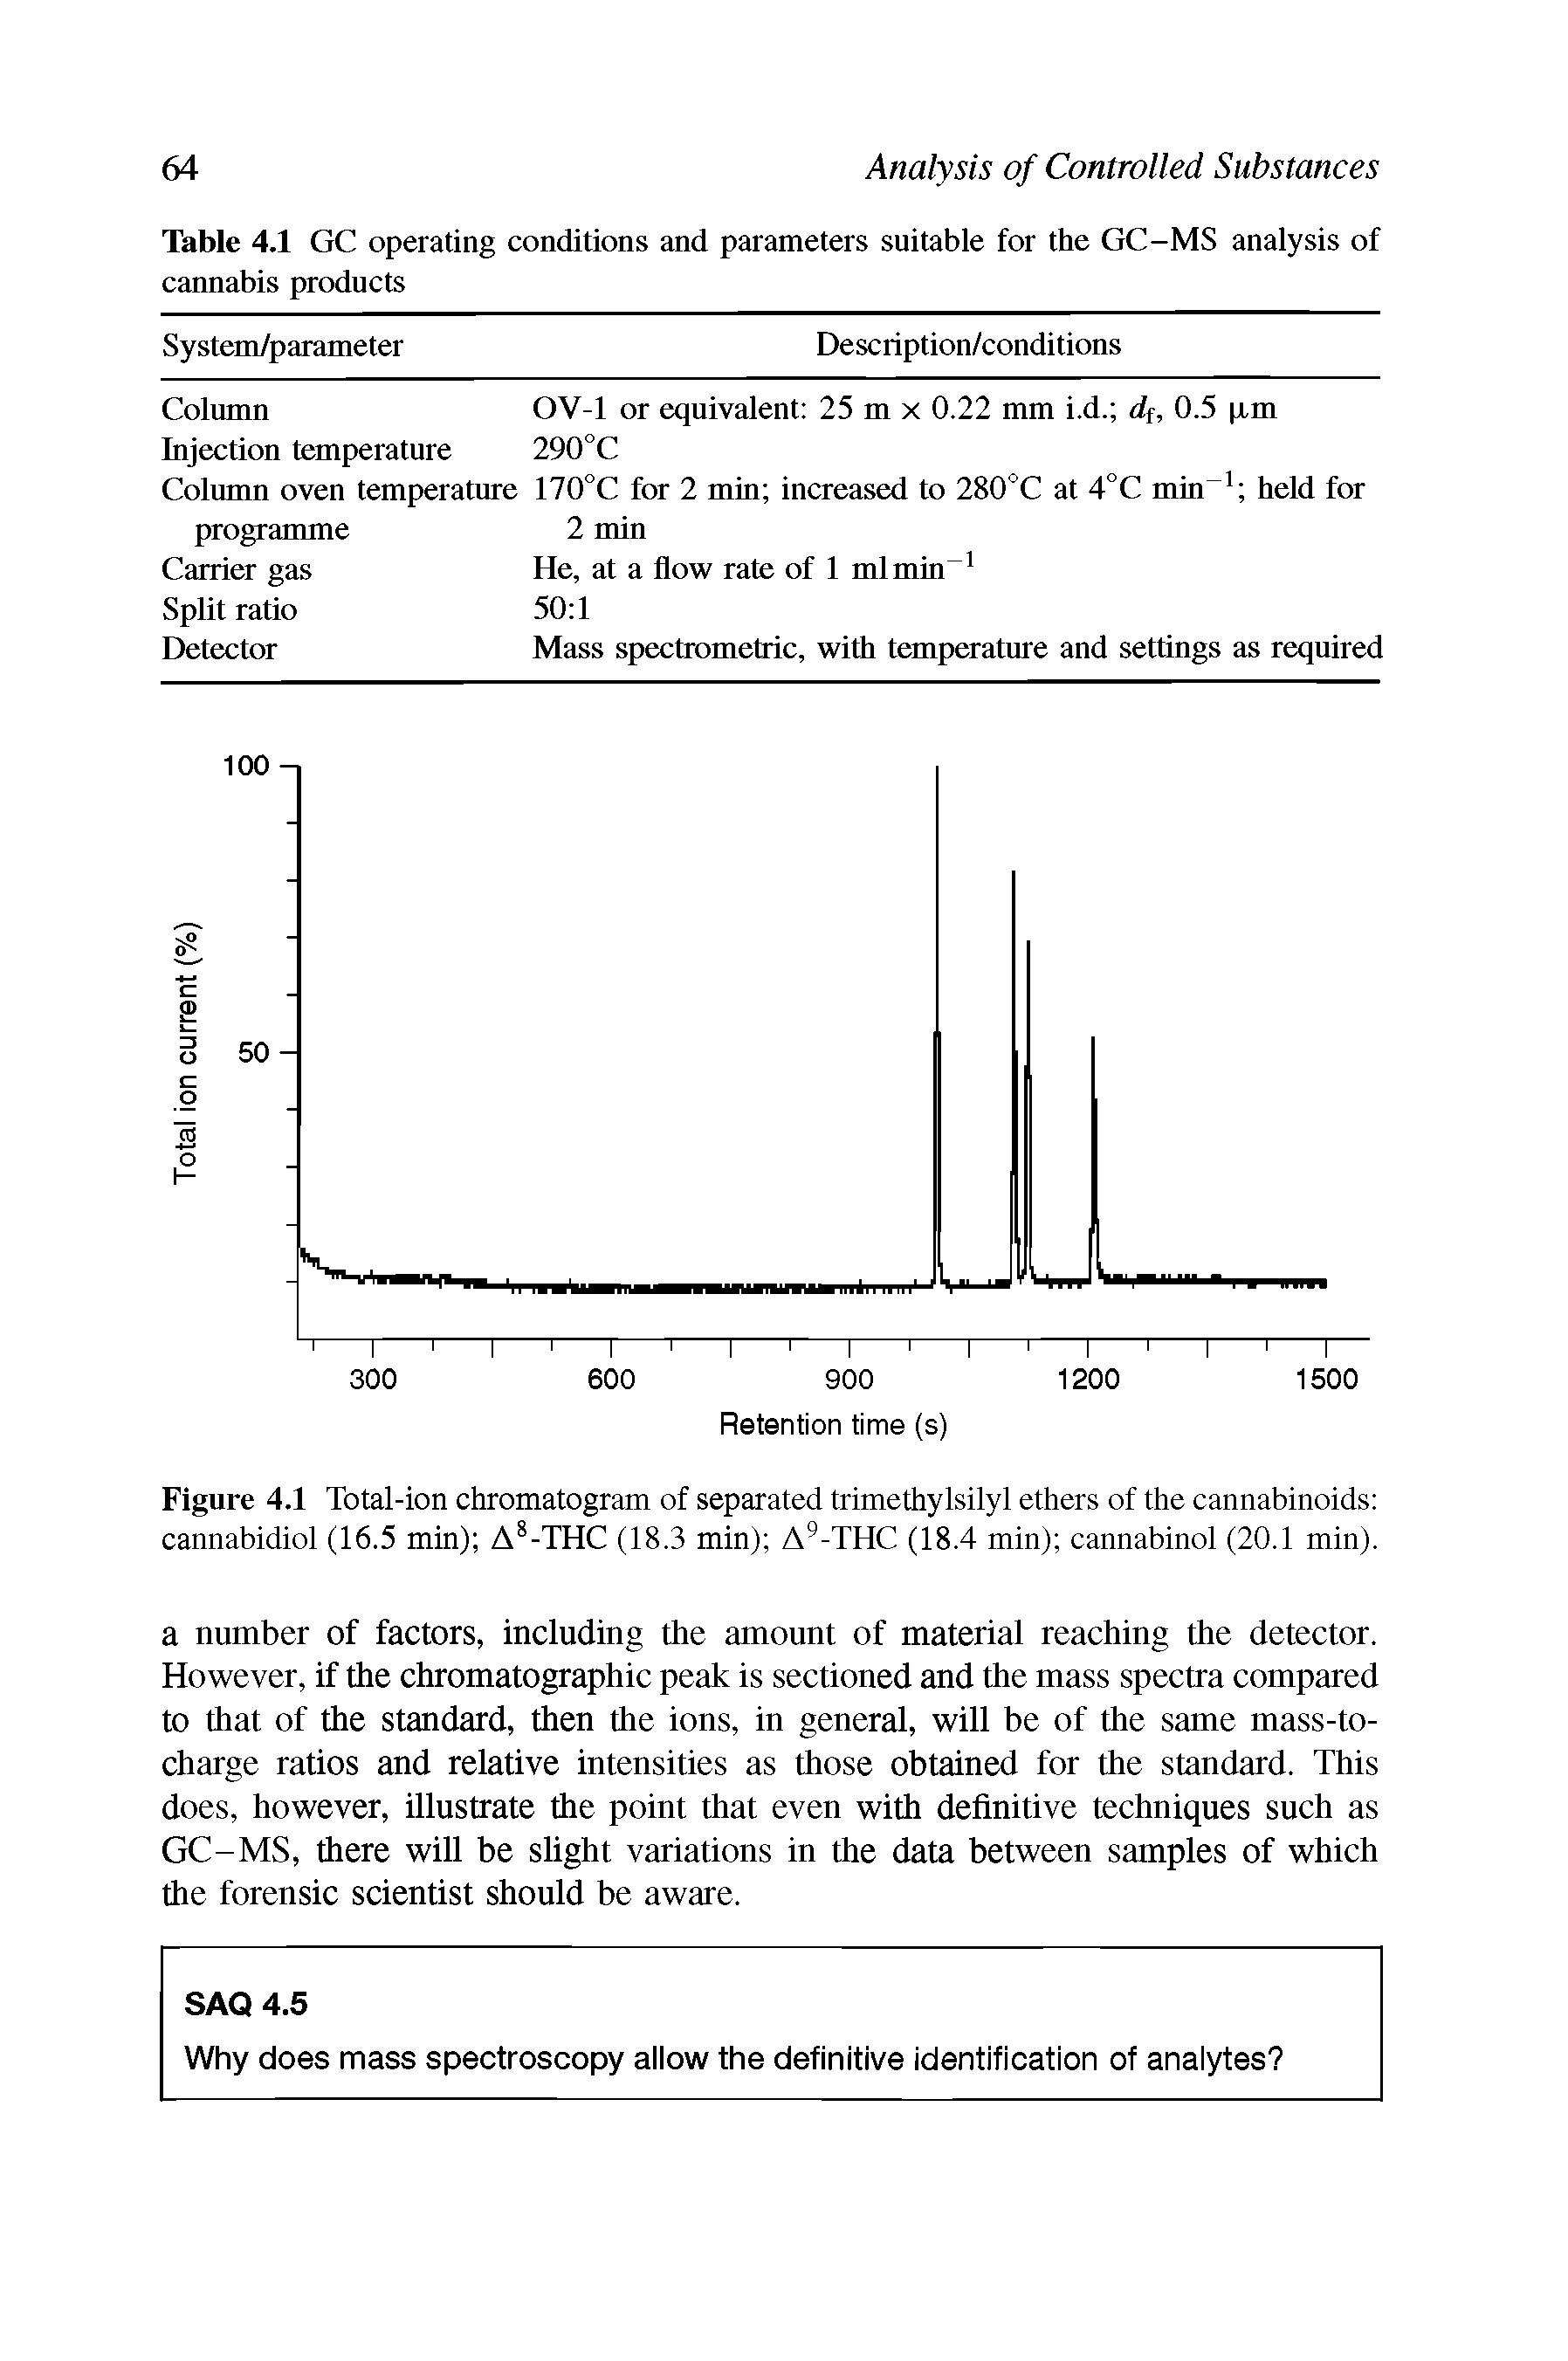 Figure 4.1 Total-ion chromatogram of separated trimethylsilyl ethers of the cannabinoids cannabidiol (16.5 min) A8-THC (18.3 min) A9-THC (18.4 min) cannabinol (20.1 min).